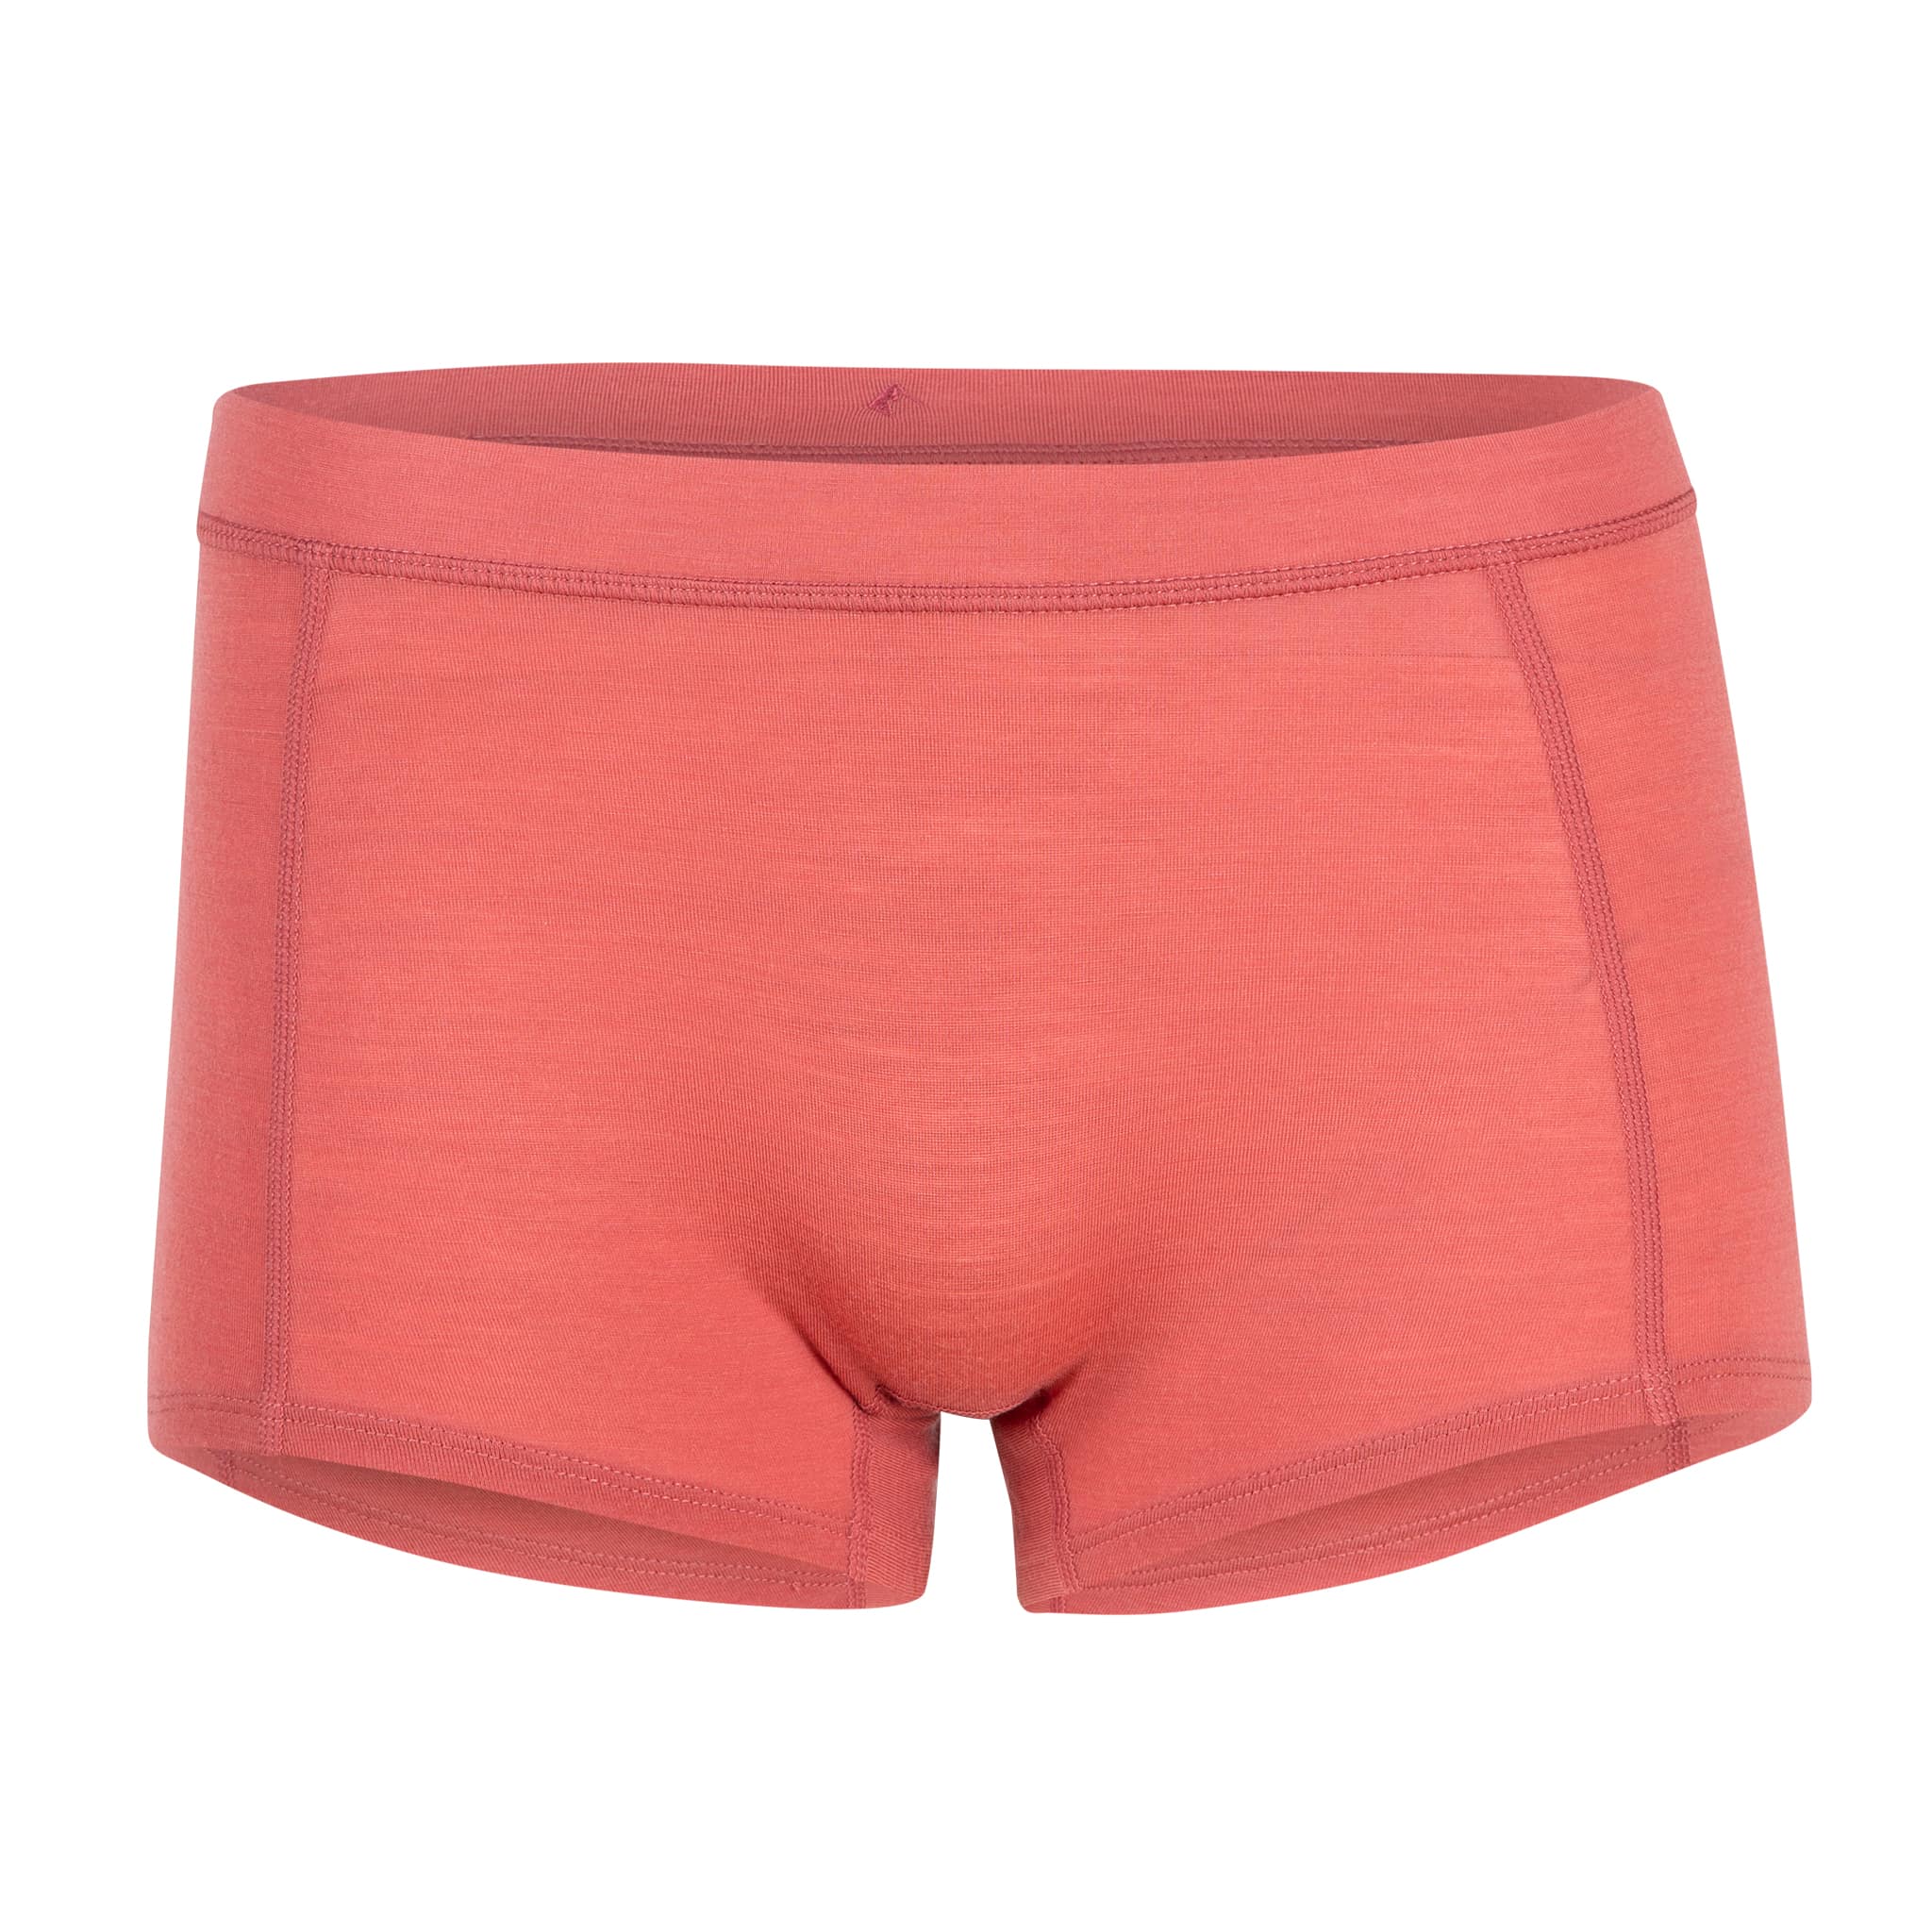 CLEARANCE Women's Ridge Boy Shorts Underwear